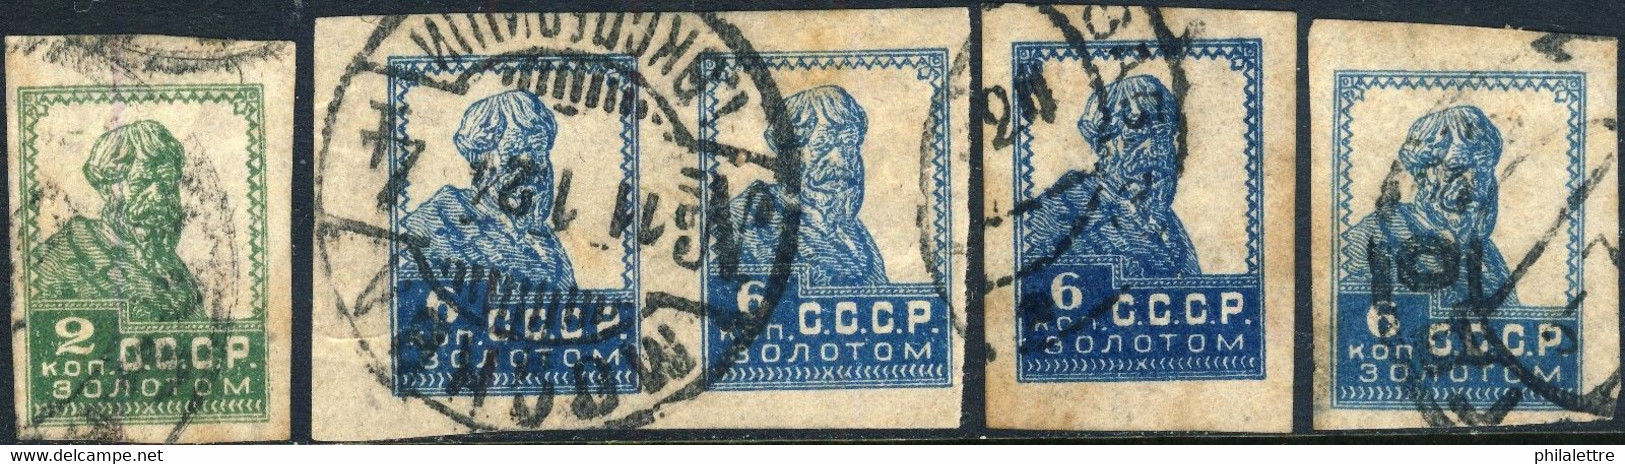 URSS / USSR - Soviet Union - 1923/4 - Mi.229.1 & 4xMi.233.I Imperf / No Wmk - VFU - Gebruikt